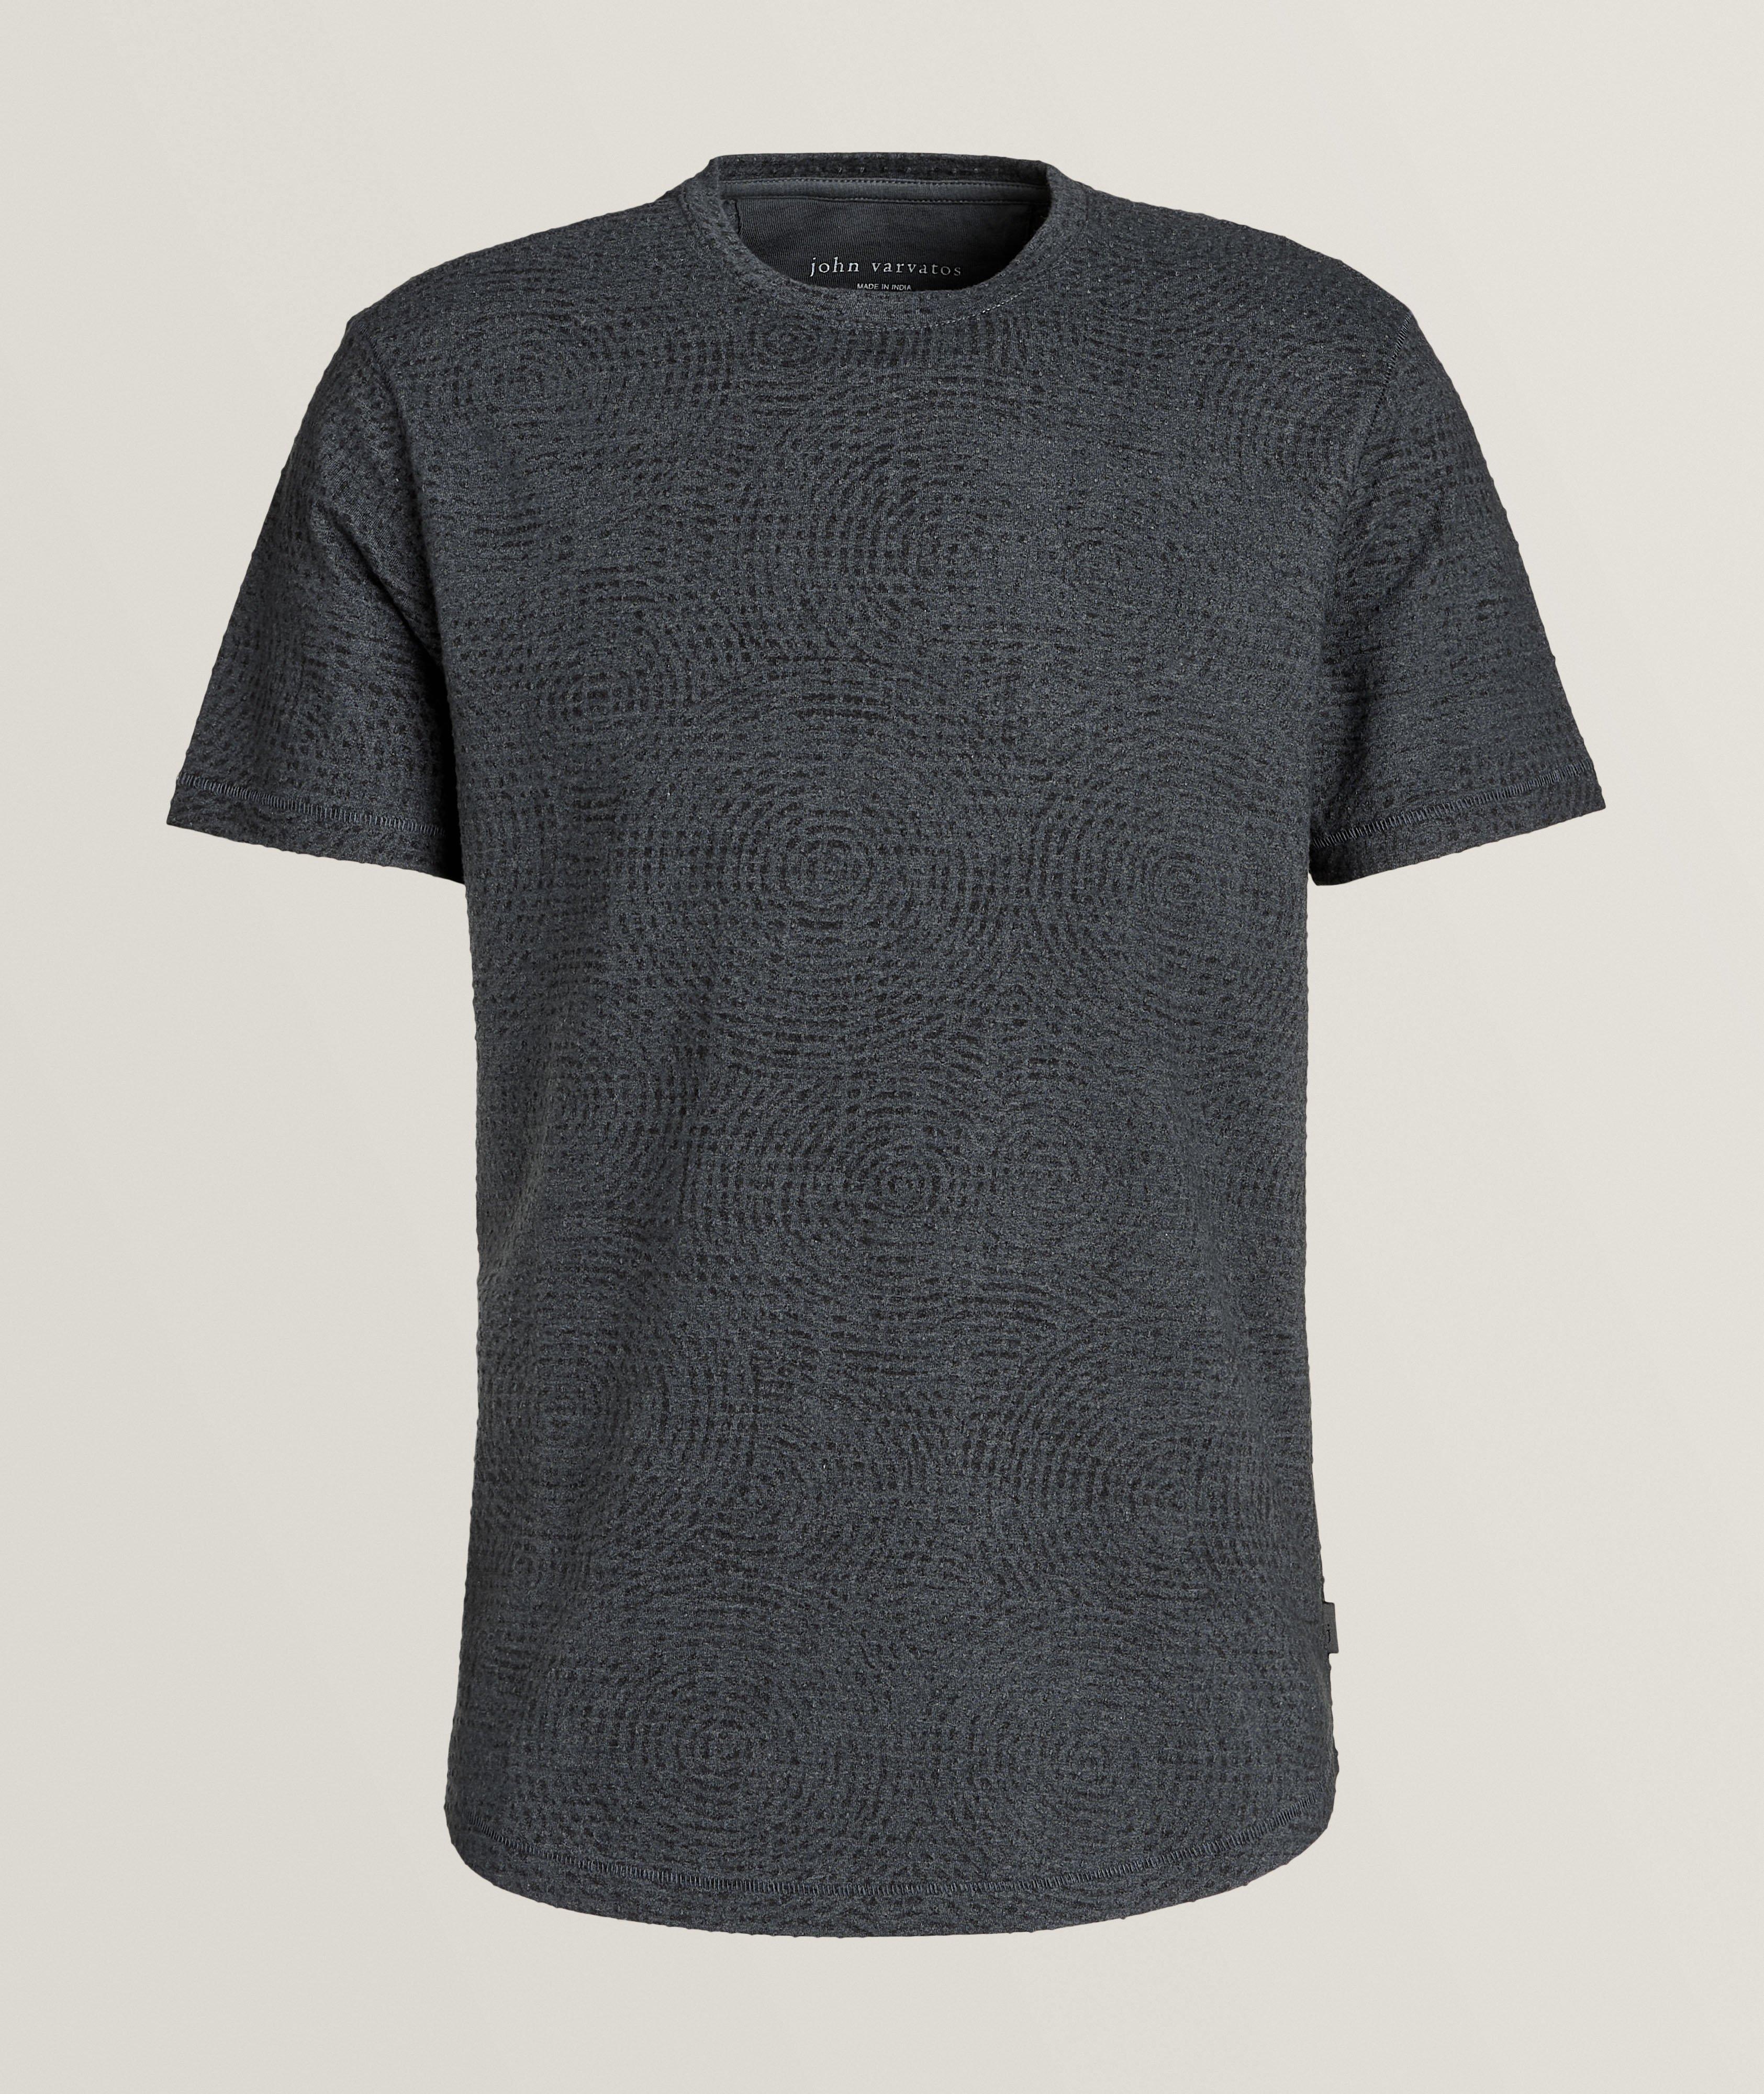 Textured Circular Stitch Cotton T-Shirt